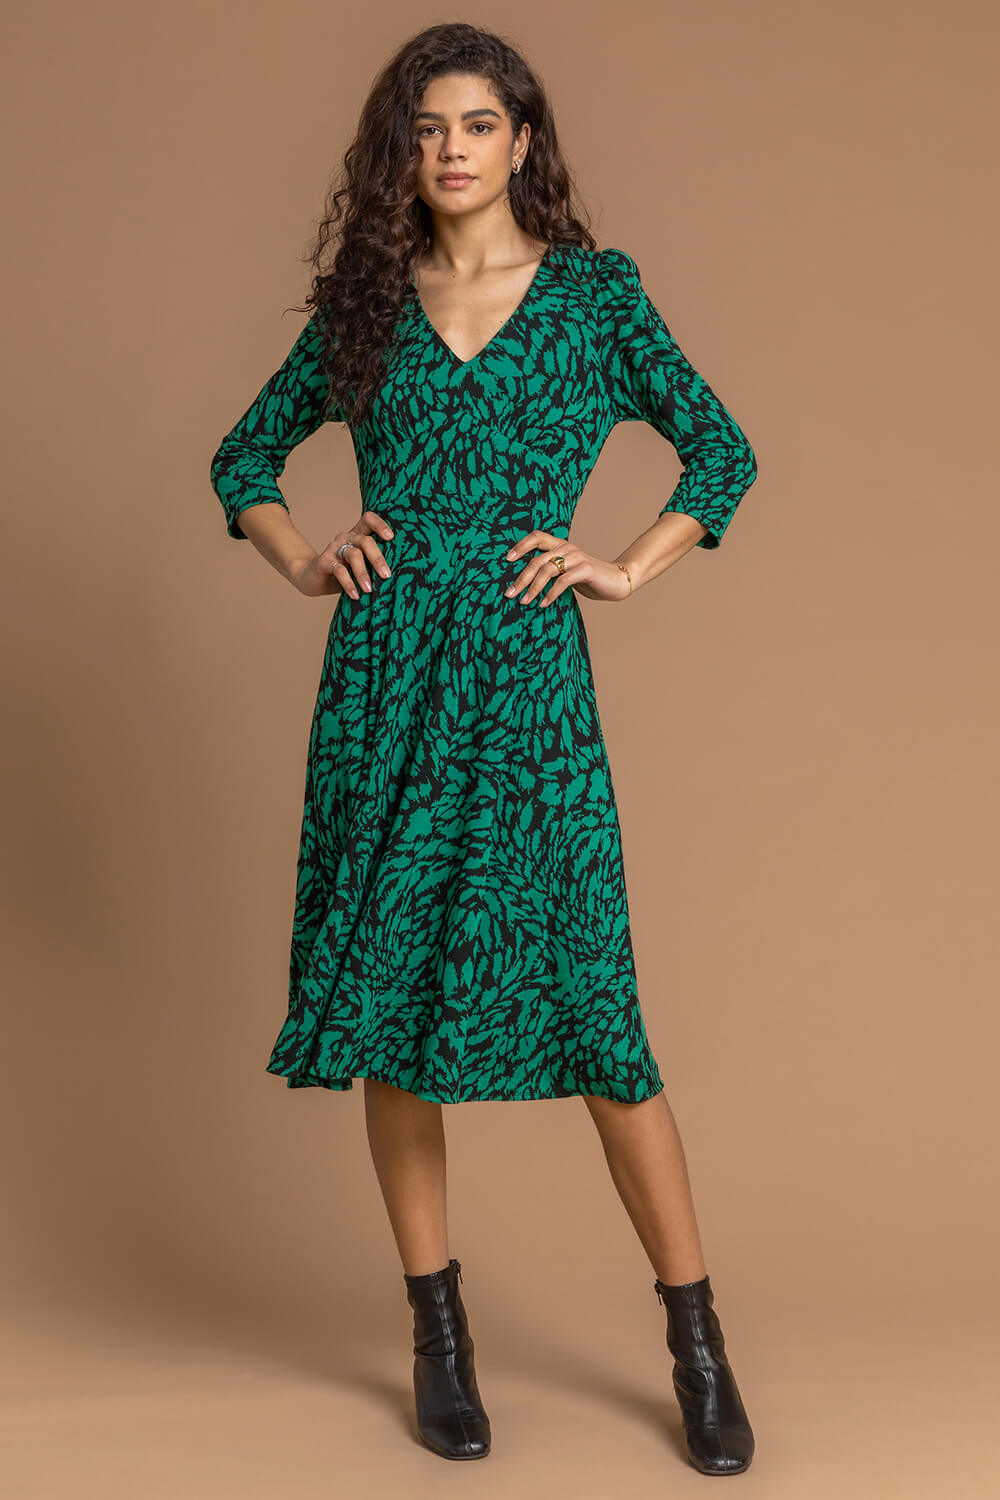 Dark Green Animal Print Jacquard Dress, Image 3 of 4